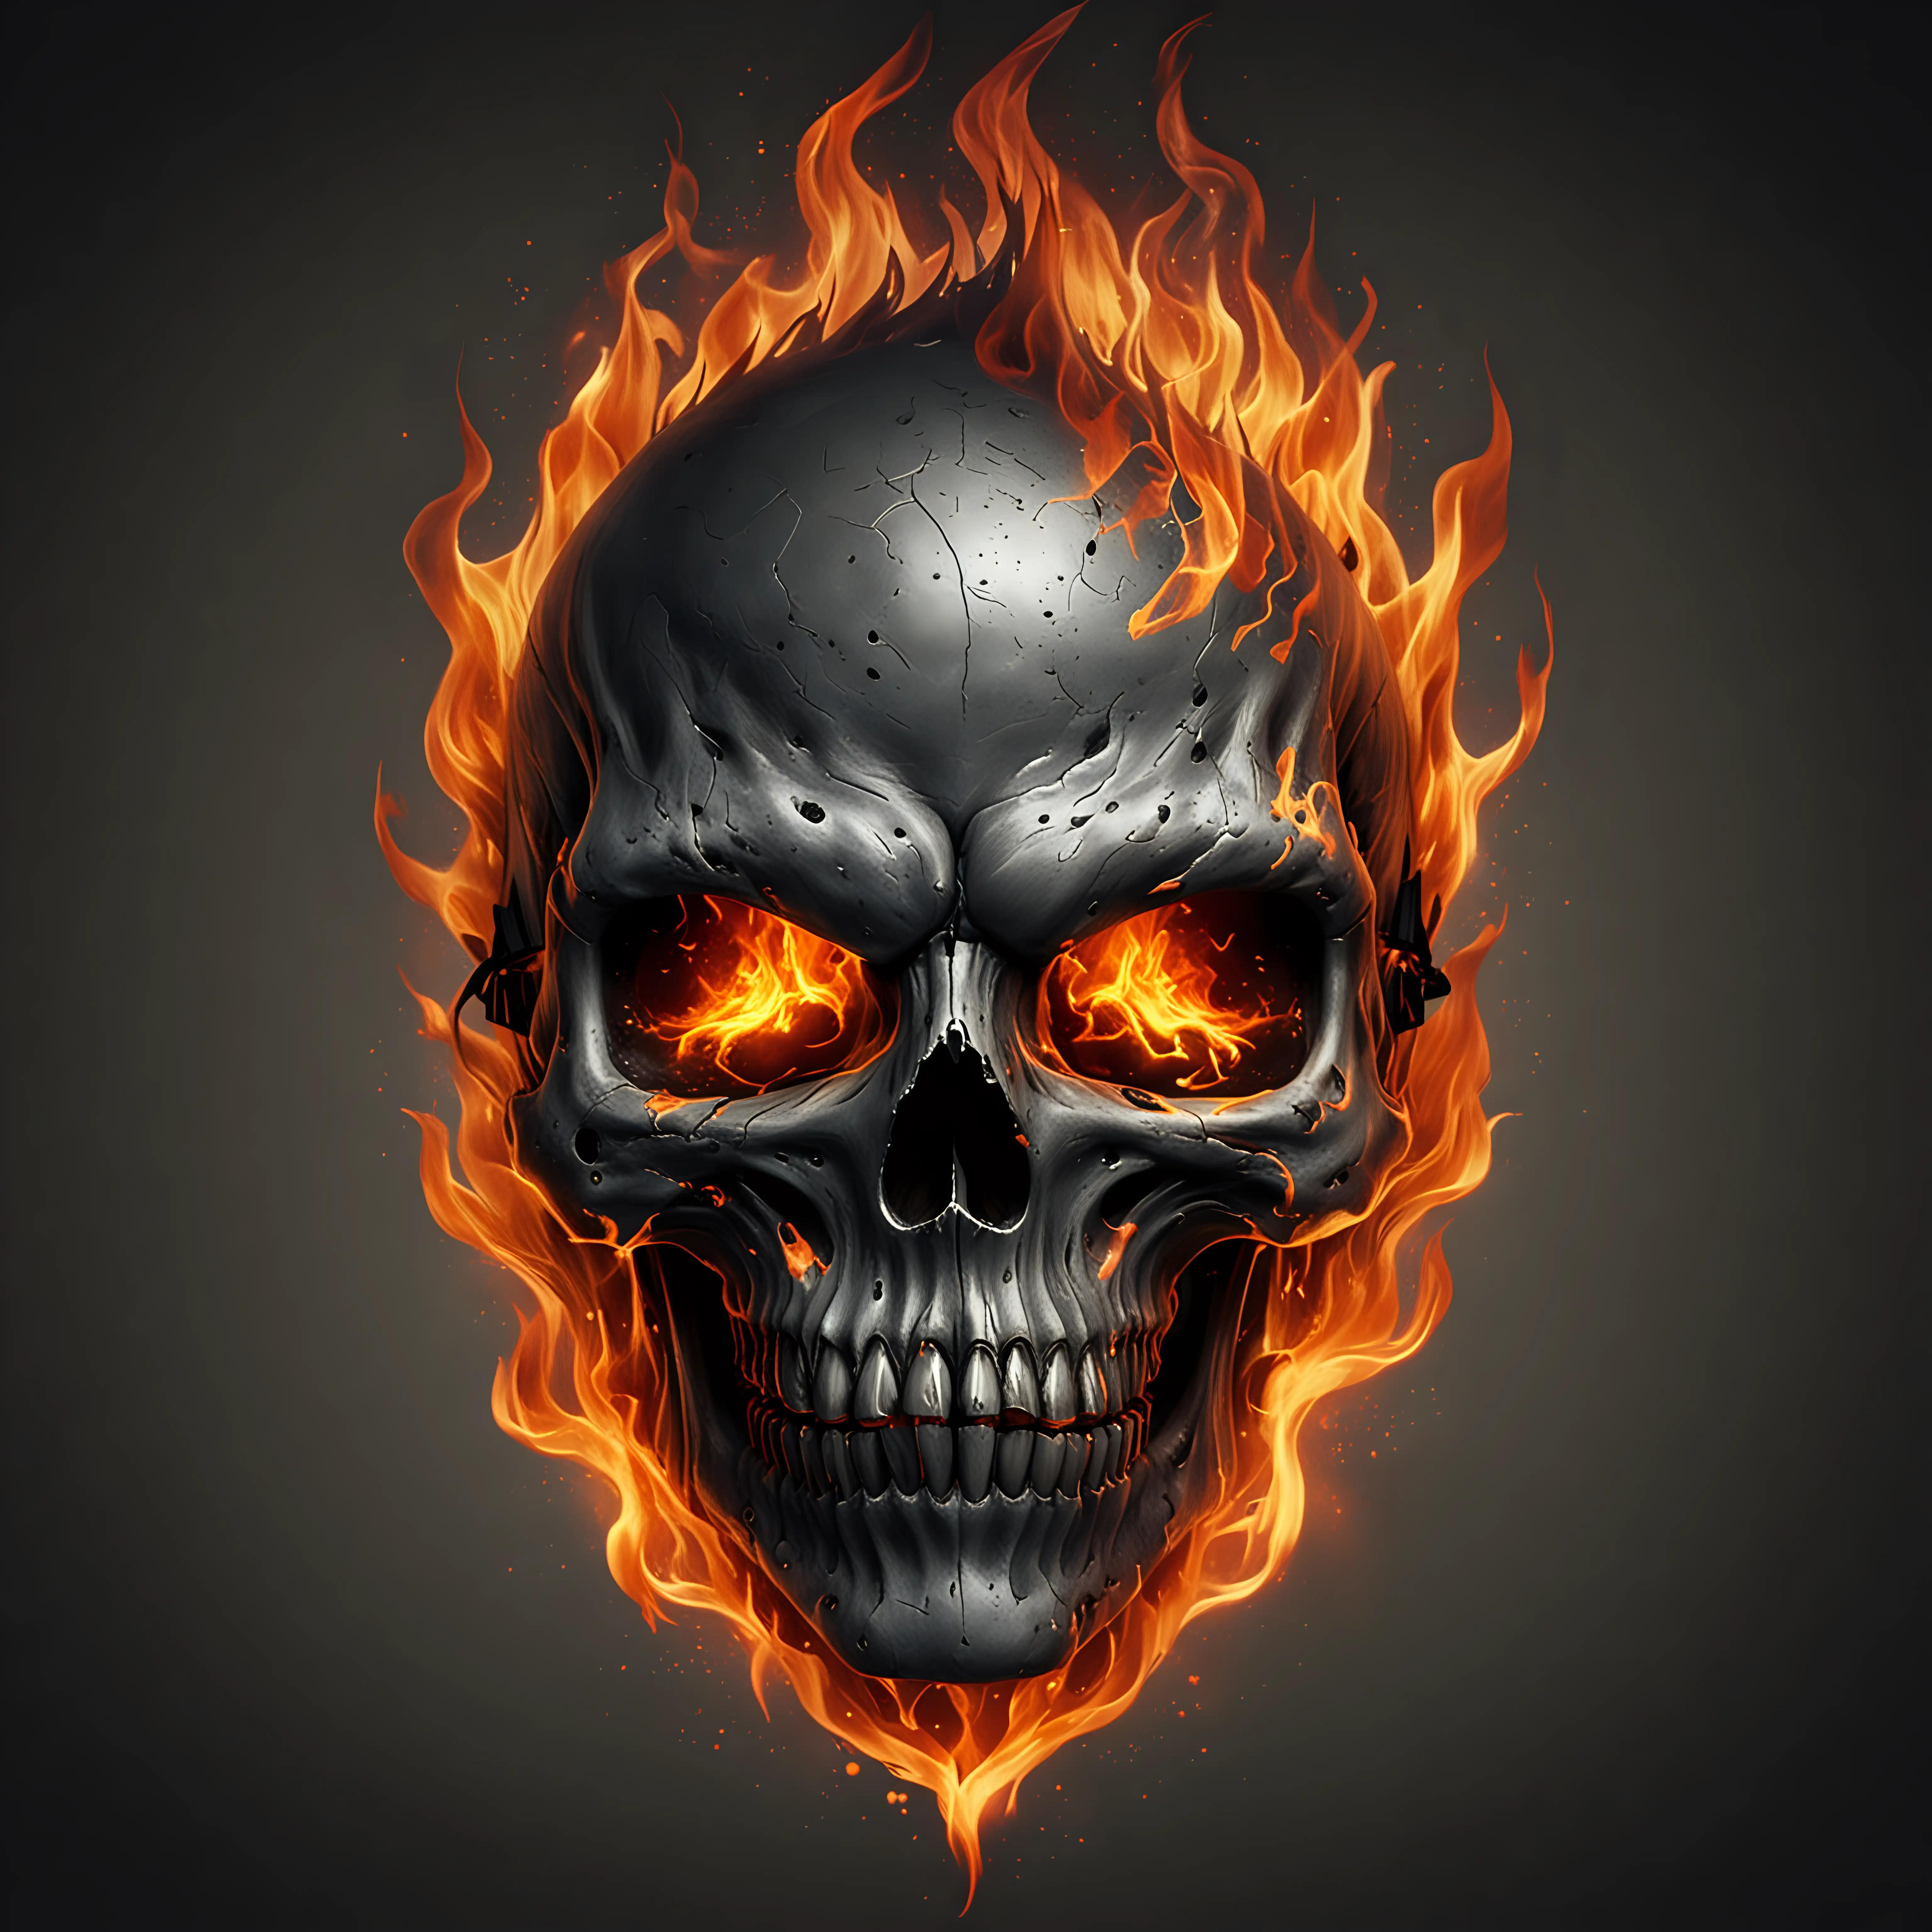 Fiery-Skull-Mask-Burning-Inferno-Halloween-Art